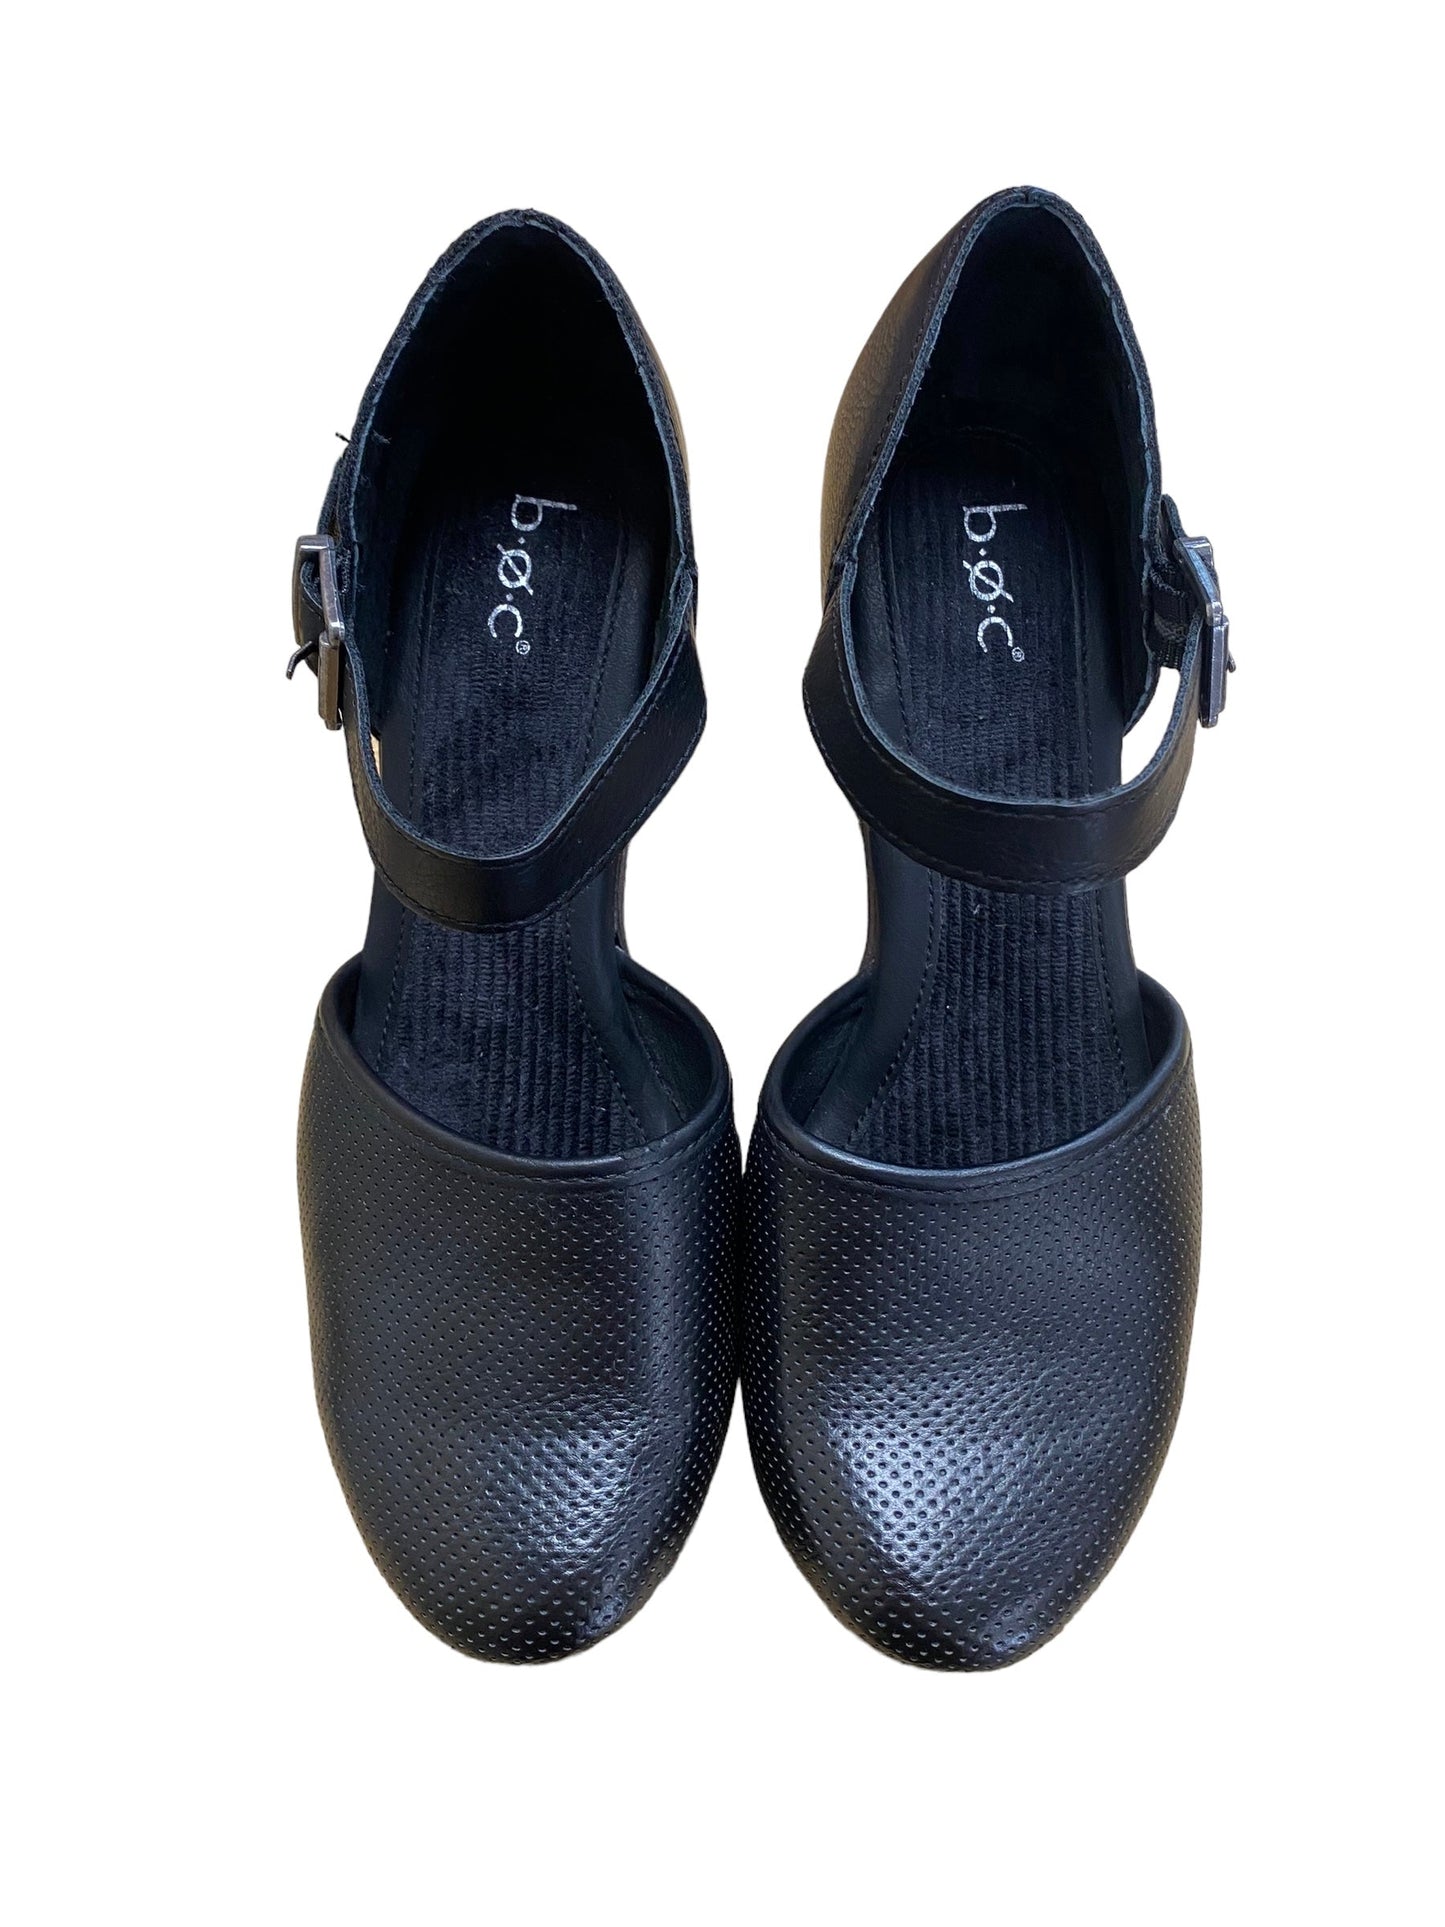 Black Shoes Heels Block Boc, Size 7.5